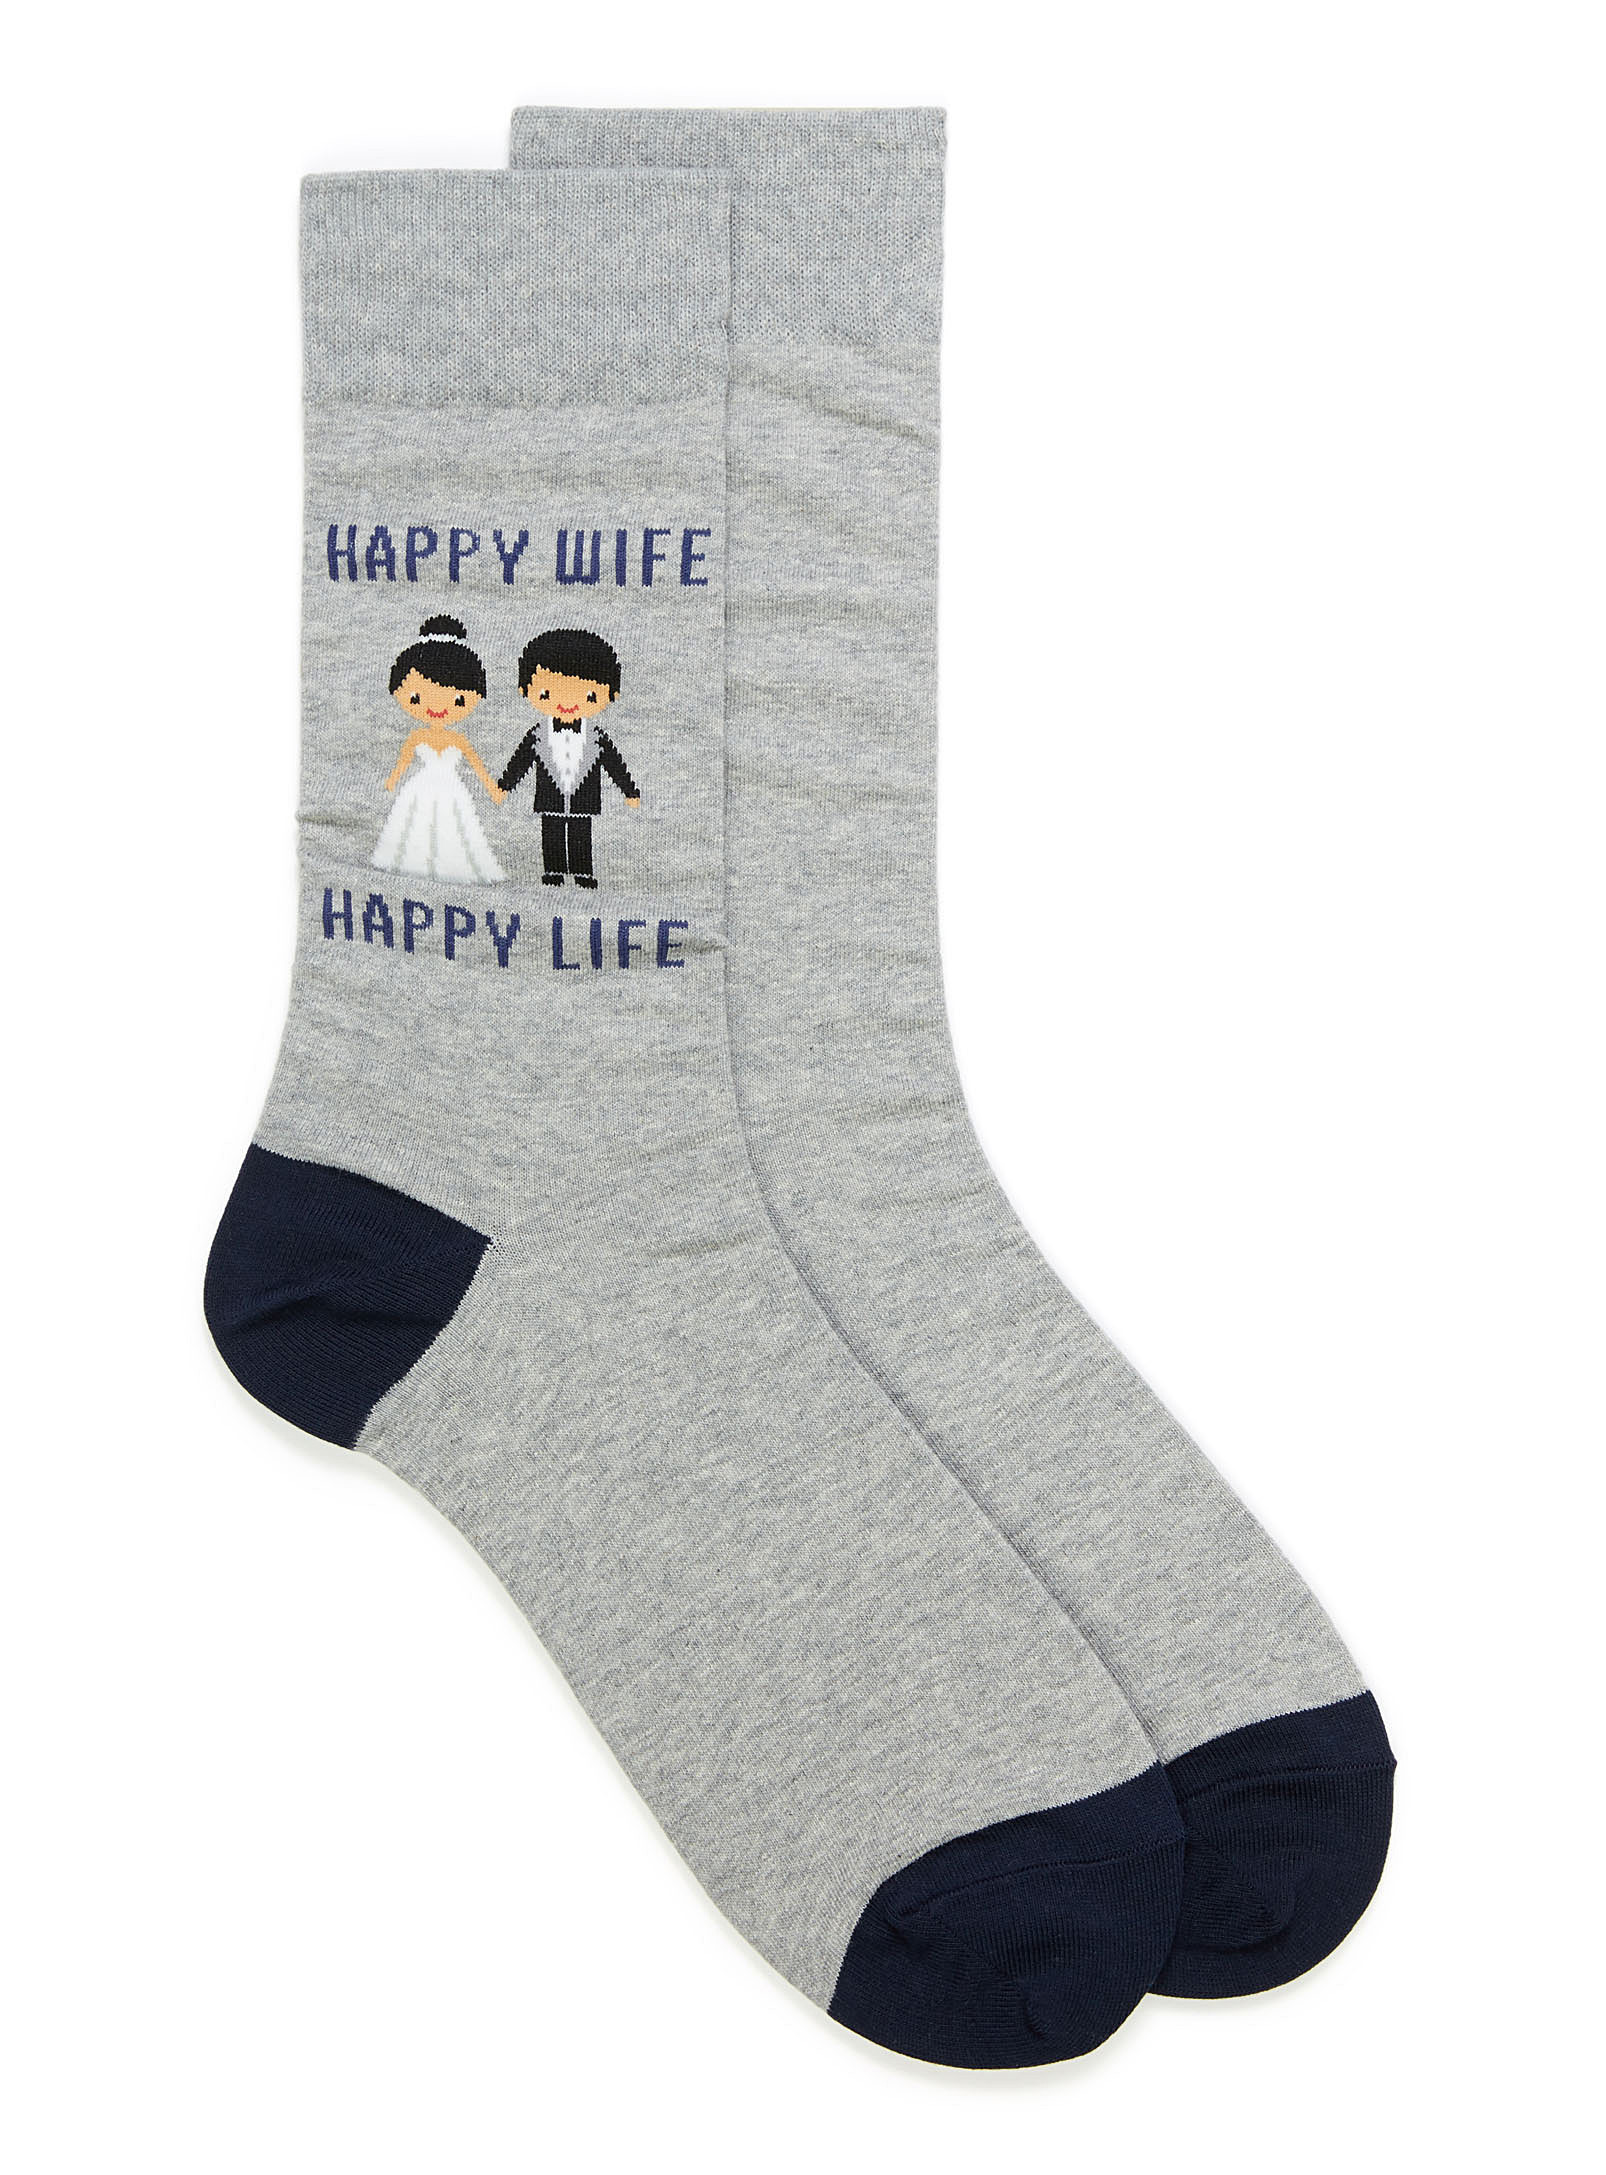 Hot Sox Happy Wife Socks In Patterned Grey